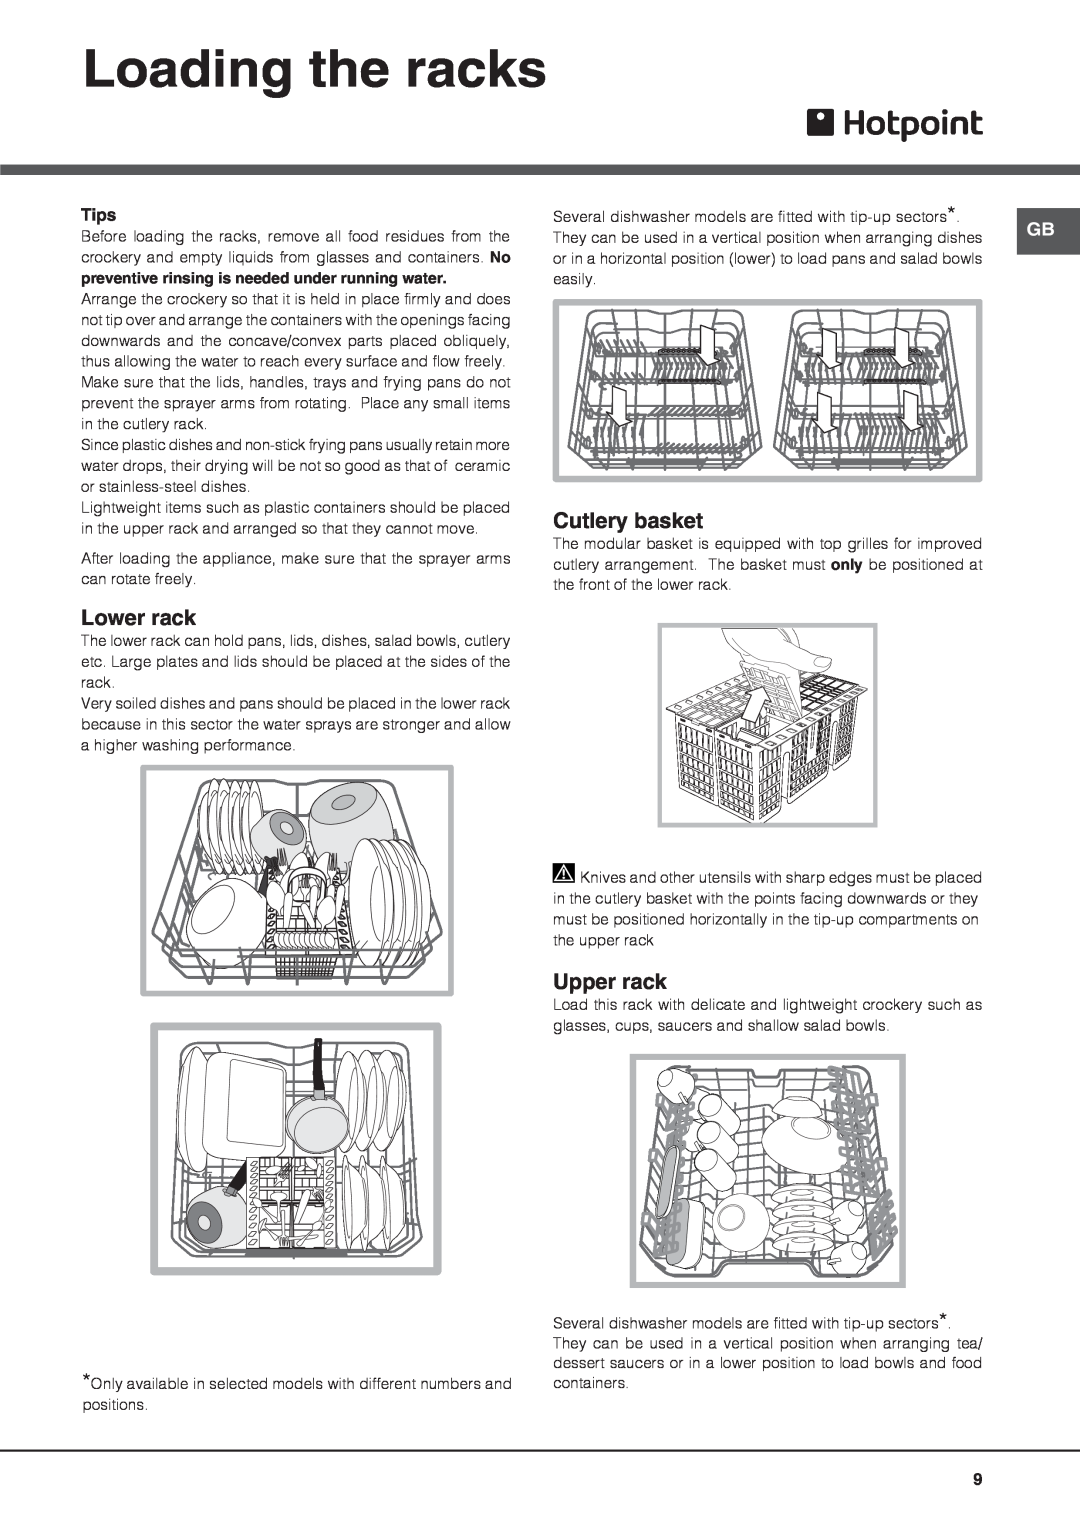 Hotpoint LTF 11M113 7C manual Loading the racks, Cutlery basket, Lower rack, Upper rack, Tips 